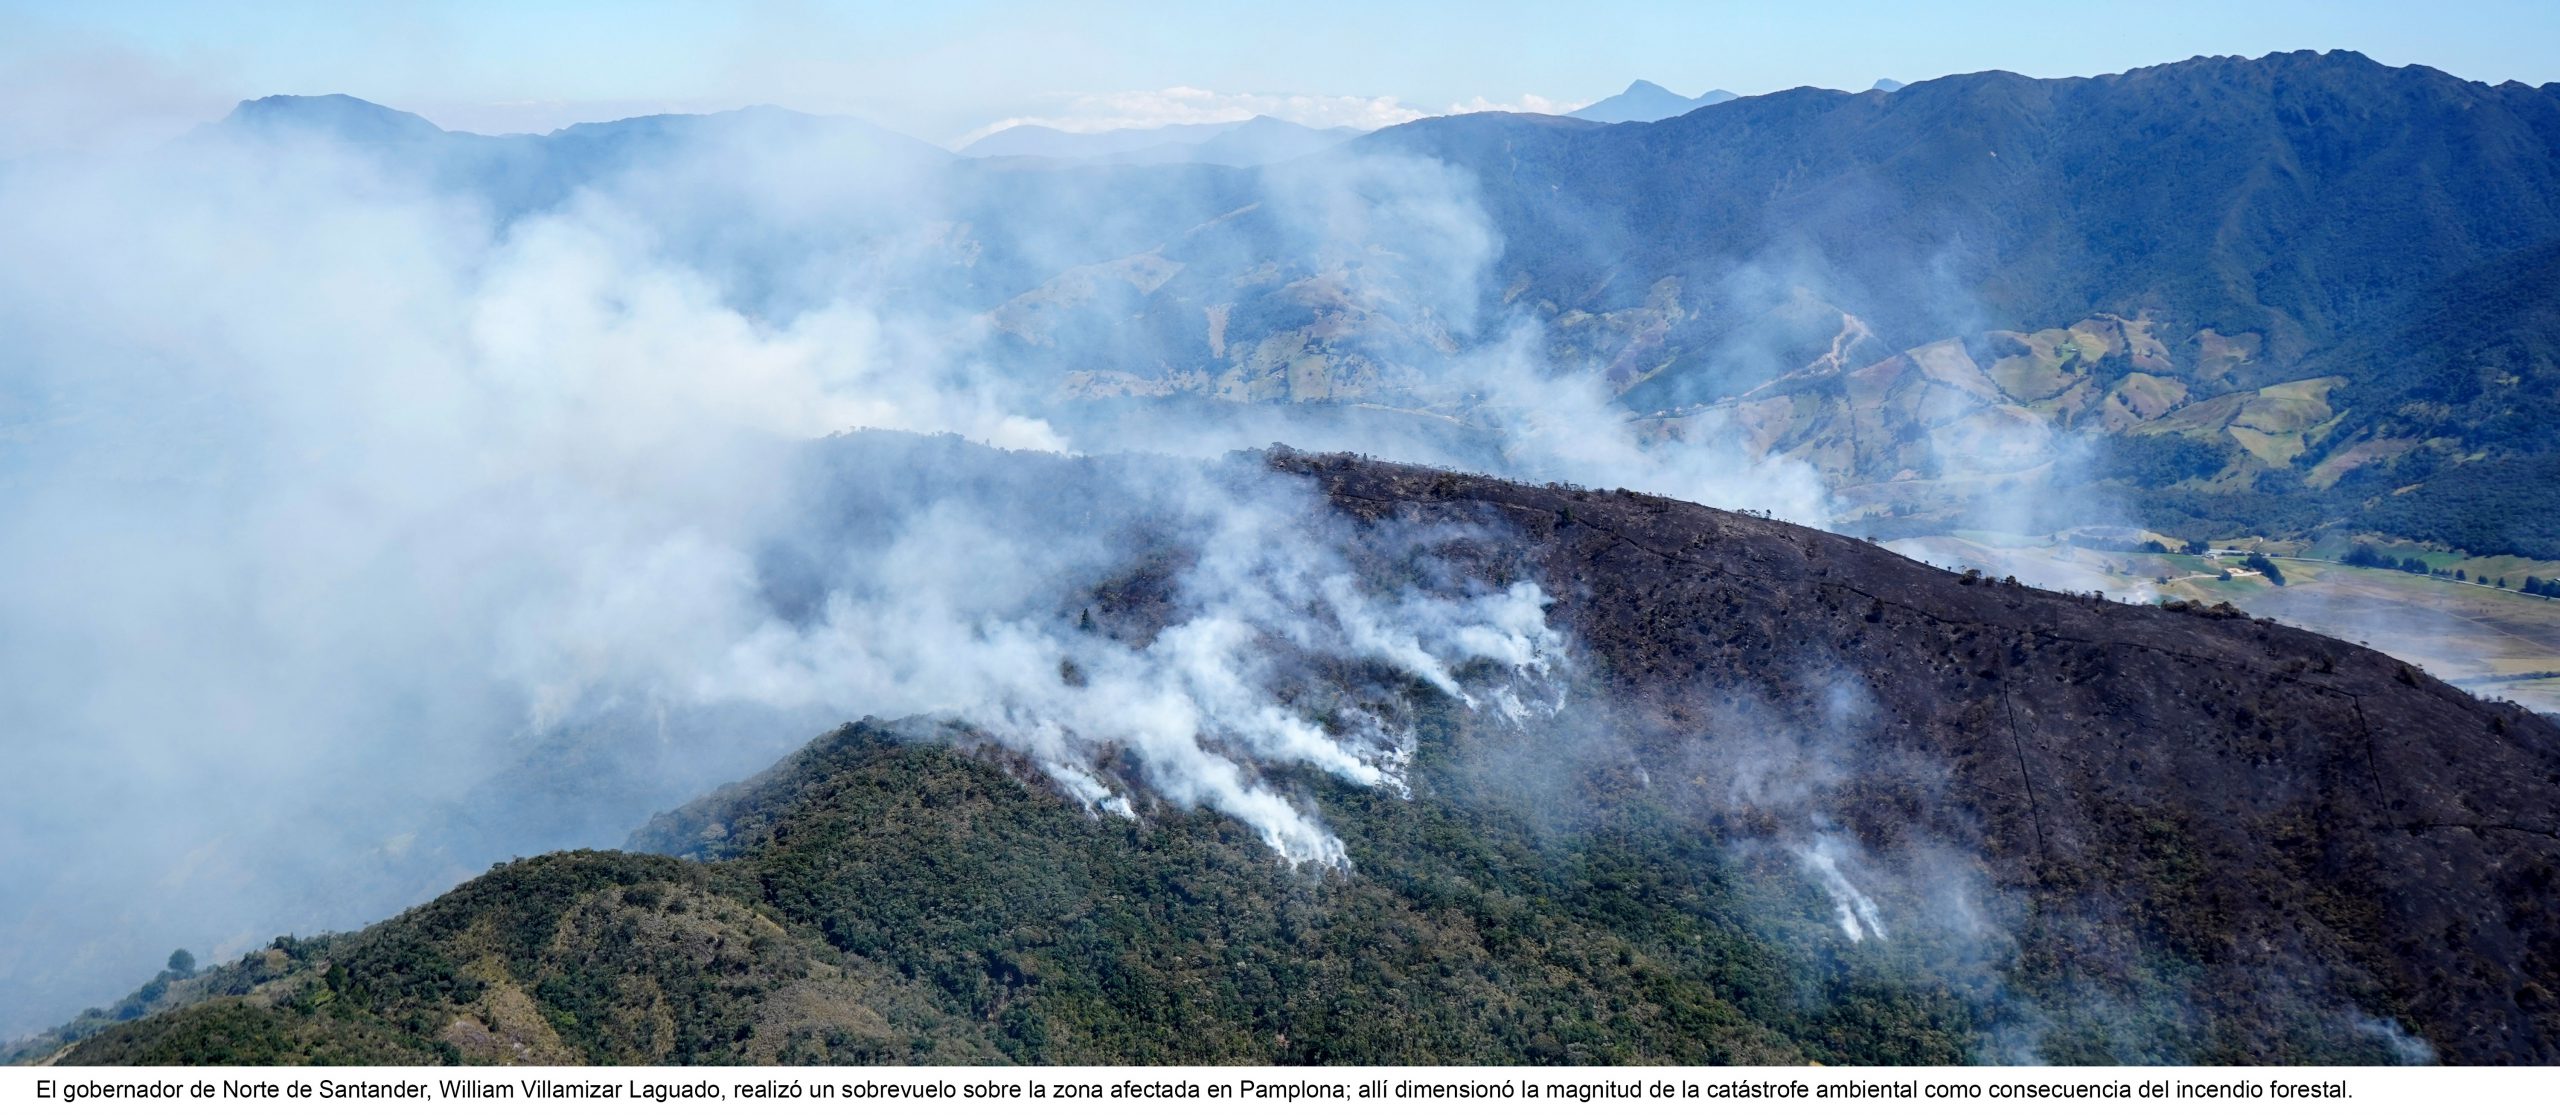 Restauración ecológica de ecosistemas afectados por incendios forestales Pamplona, Norte de Santander